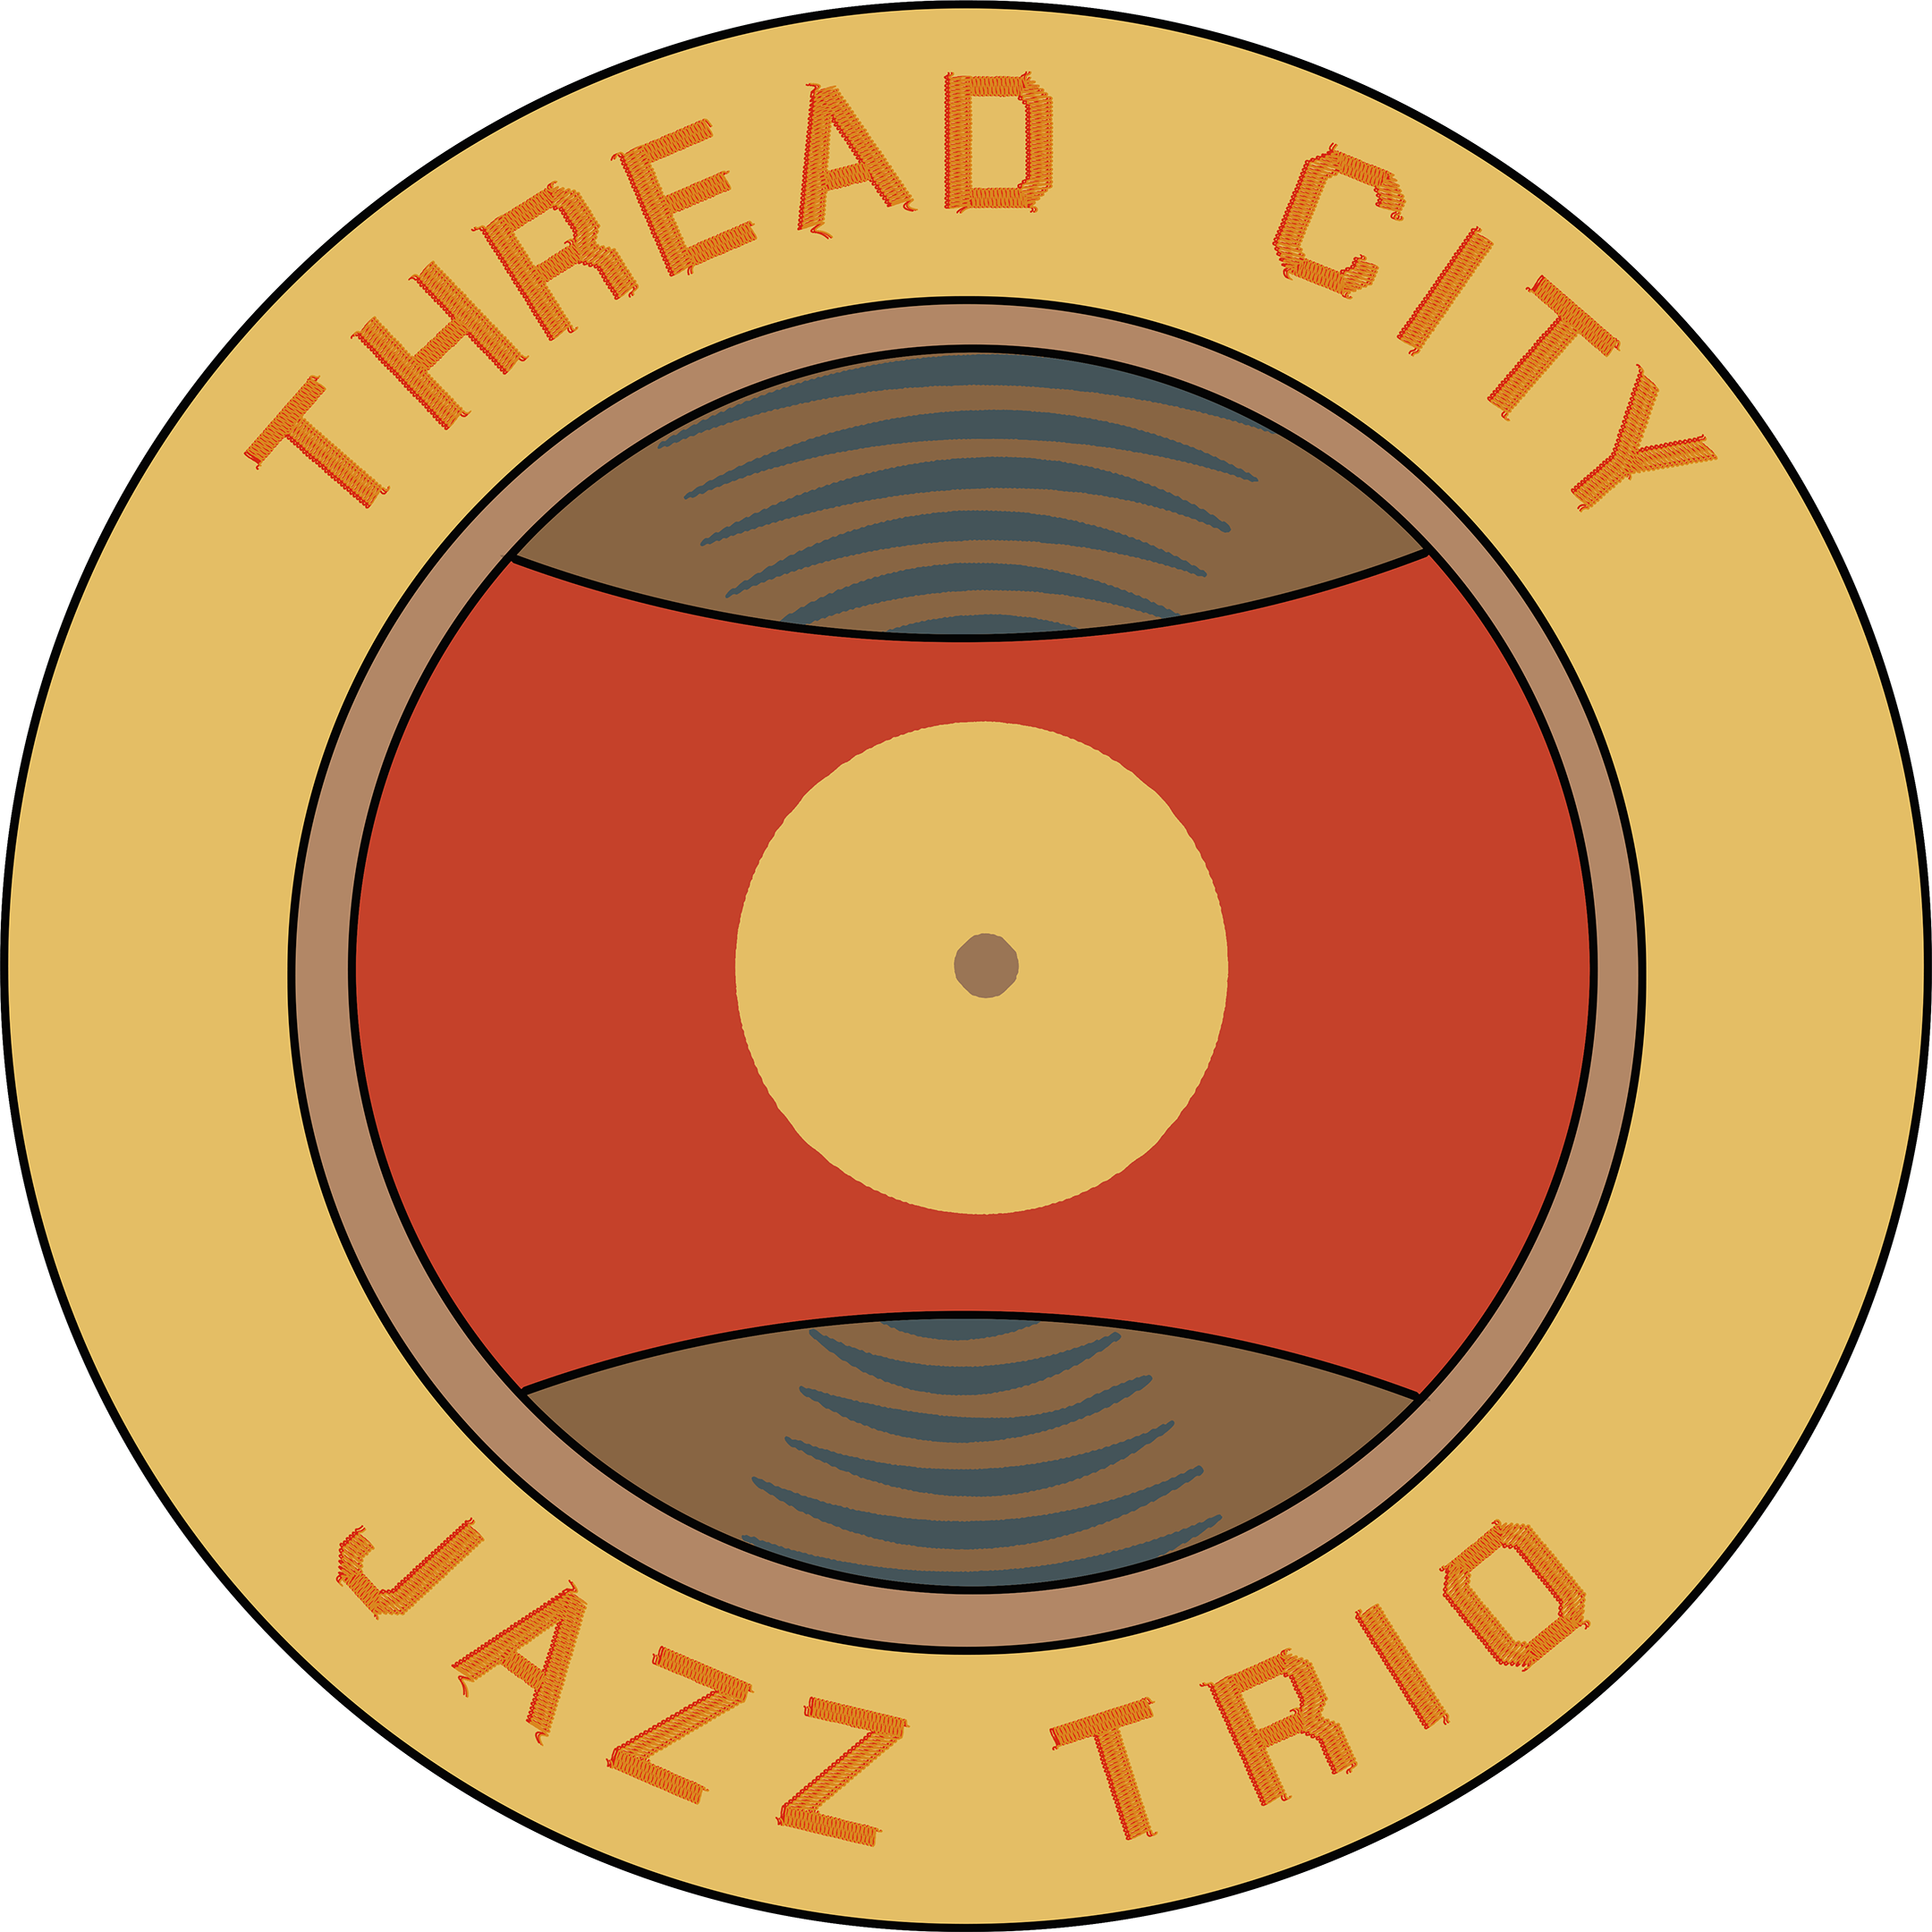 Thread City Jazz